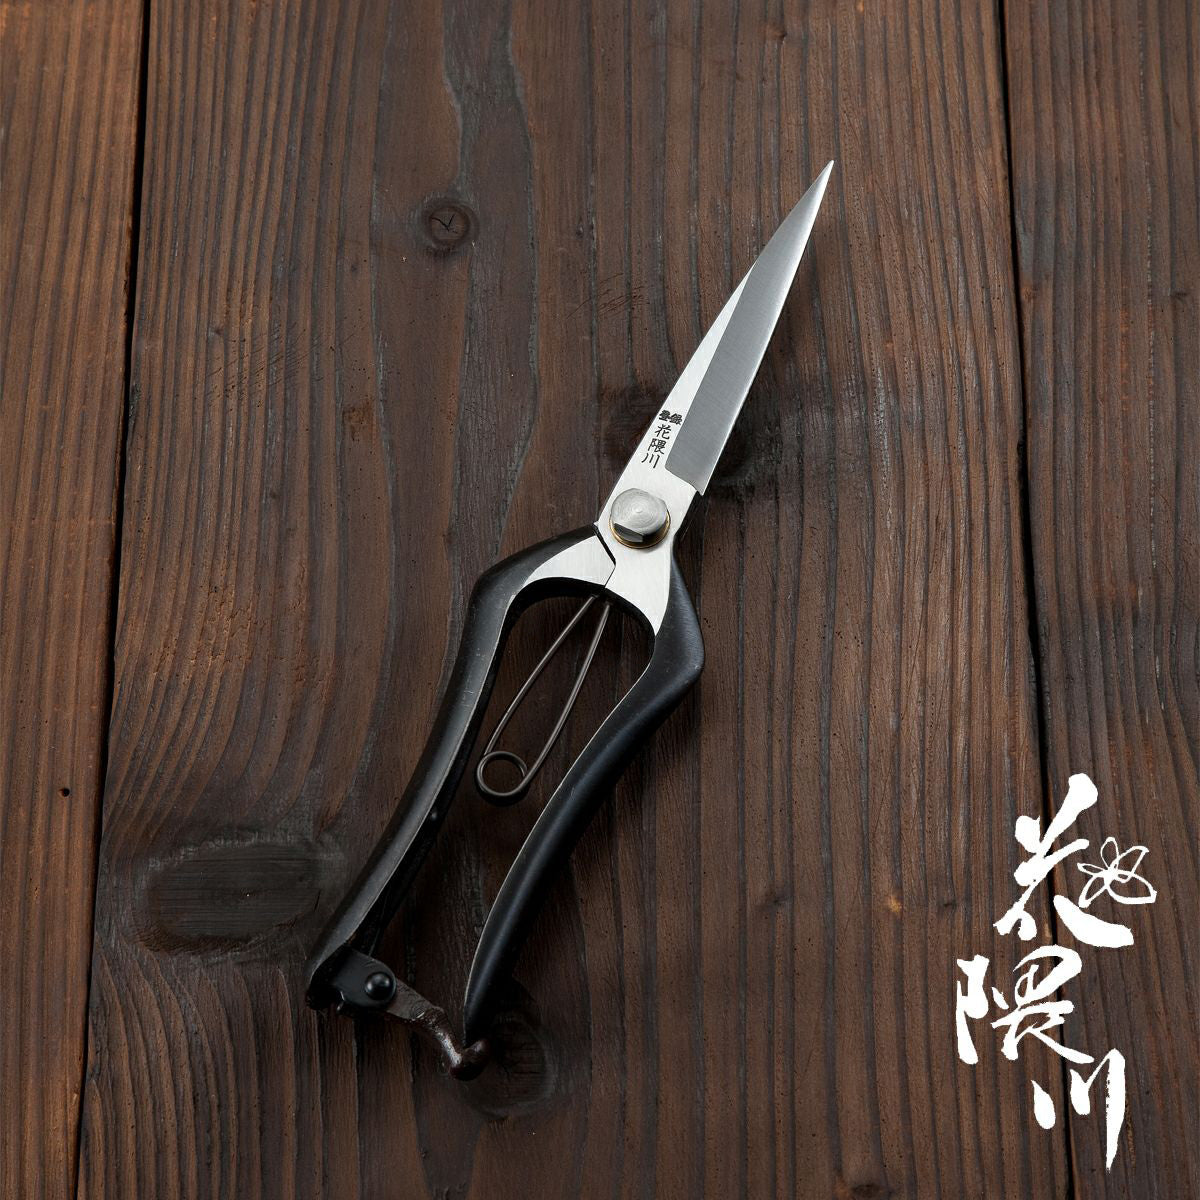 HONMAMON "HANAKUMAGAWA" Japanese Bud-Cutting Shears 230mm(abt 9.1") for Bonsai, Pruning